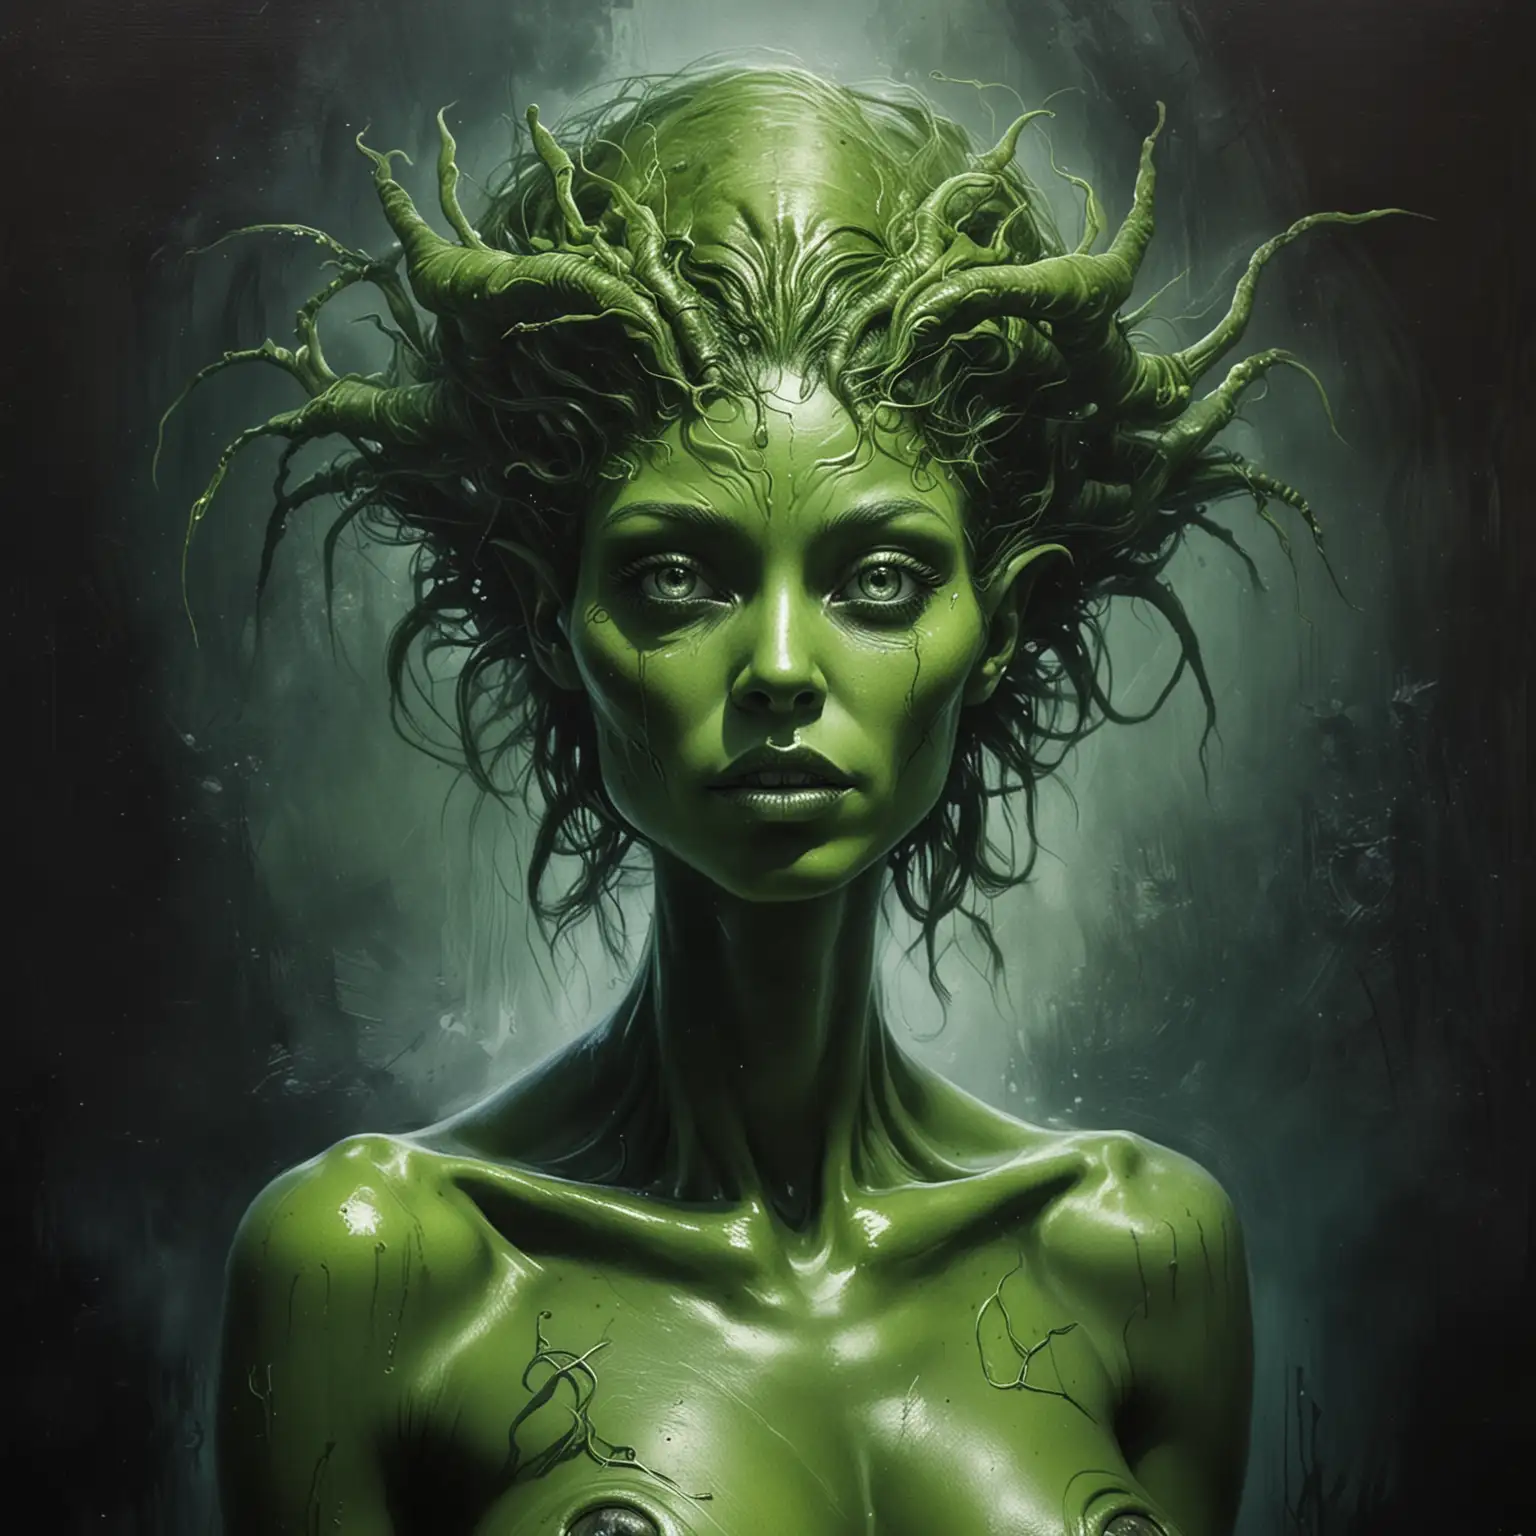 Futuristic Alien Woman in Vibrant Green Otherworldly Portrait Art